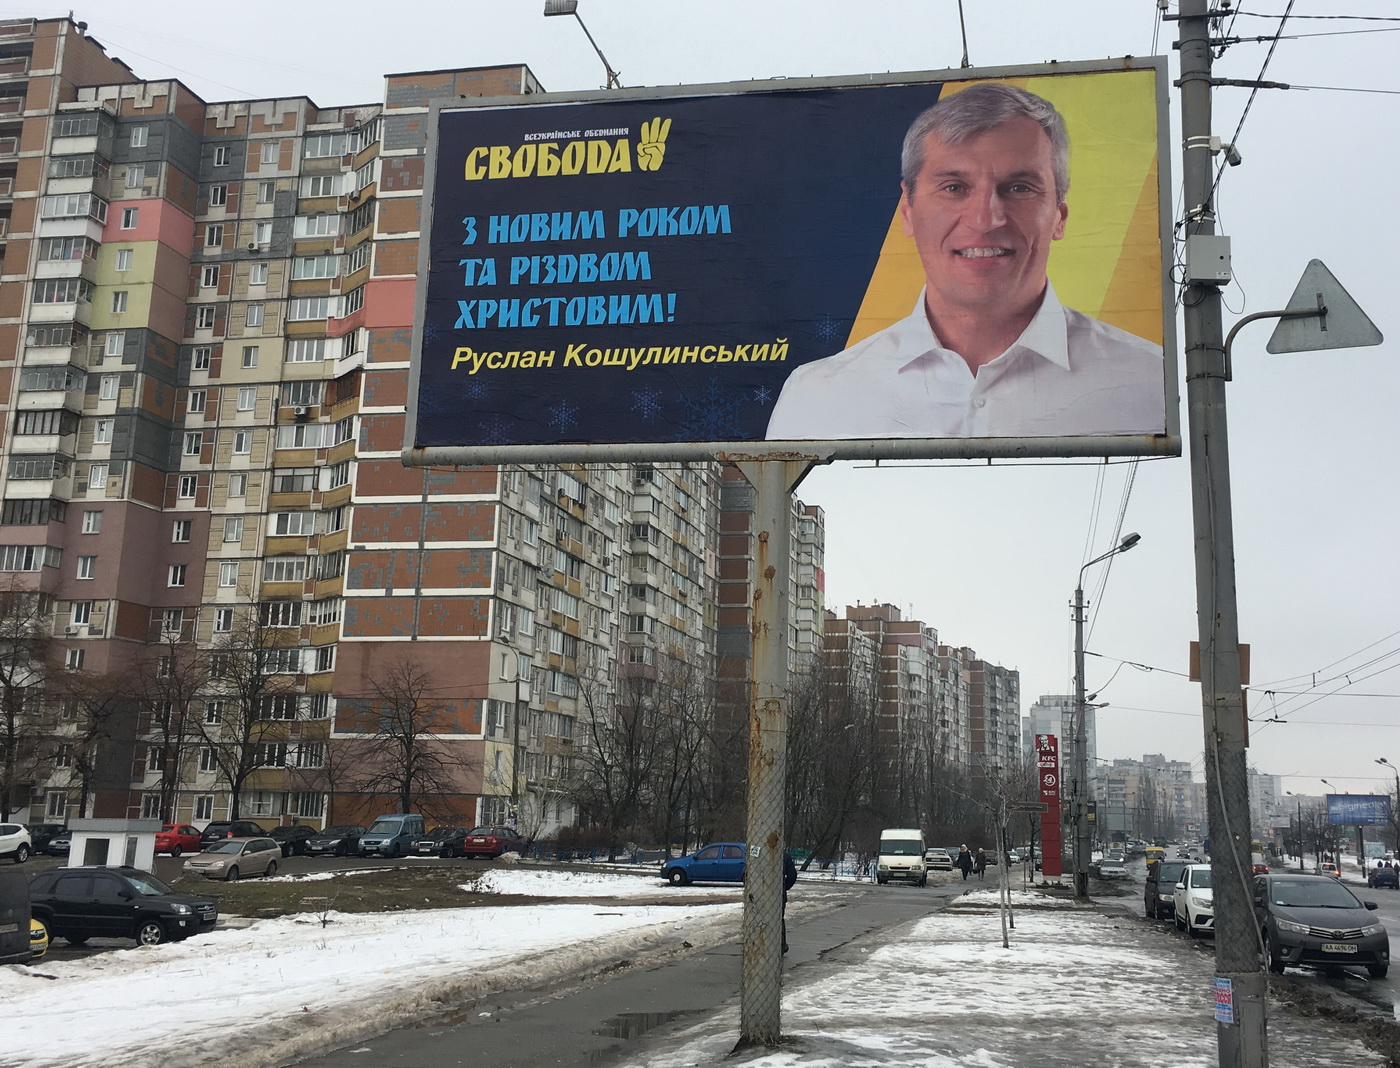 07 02 2019 Kyiv bilbordy koshulynskyi1